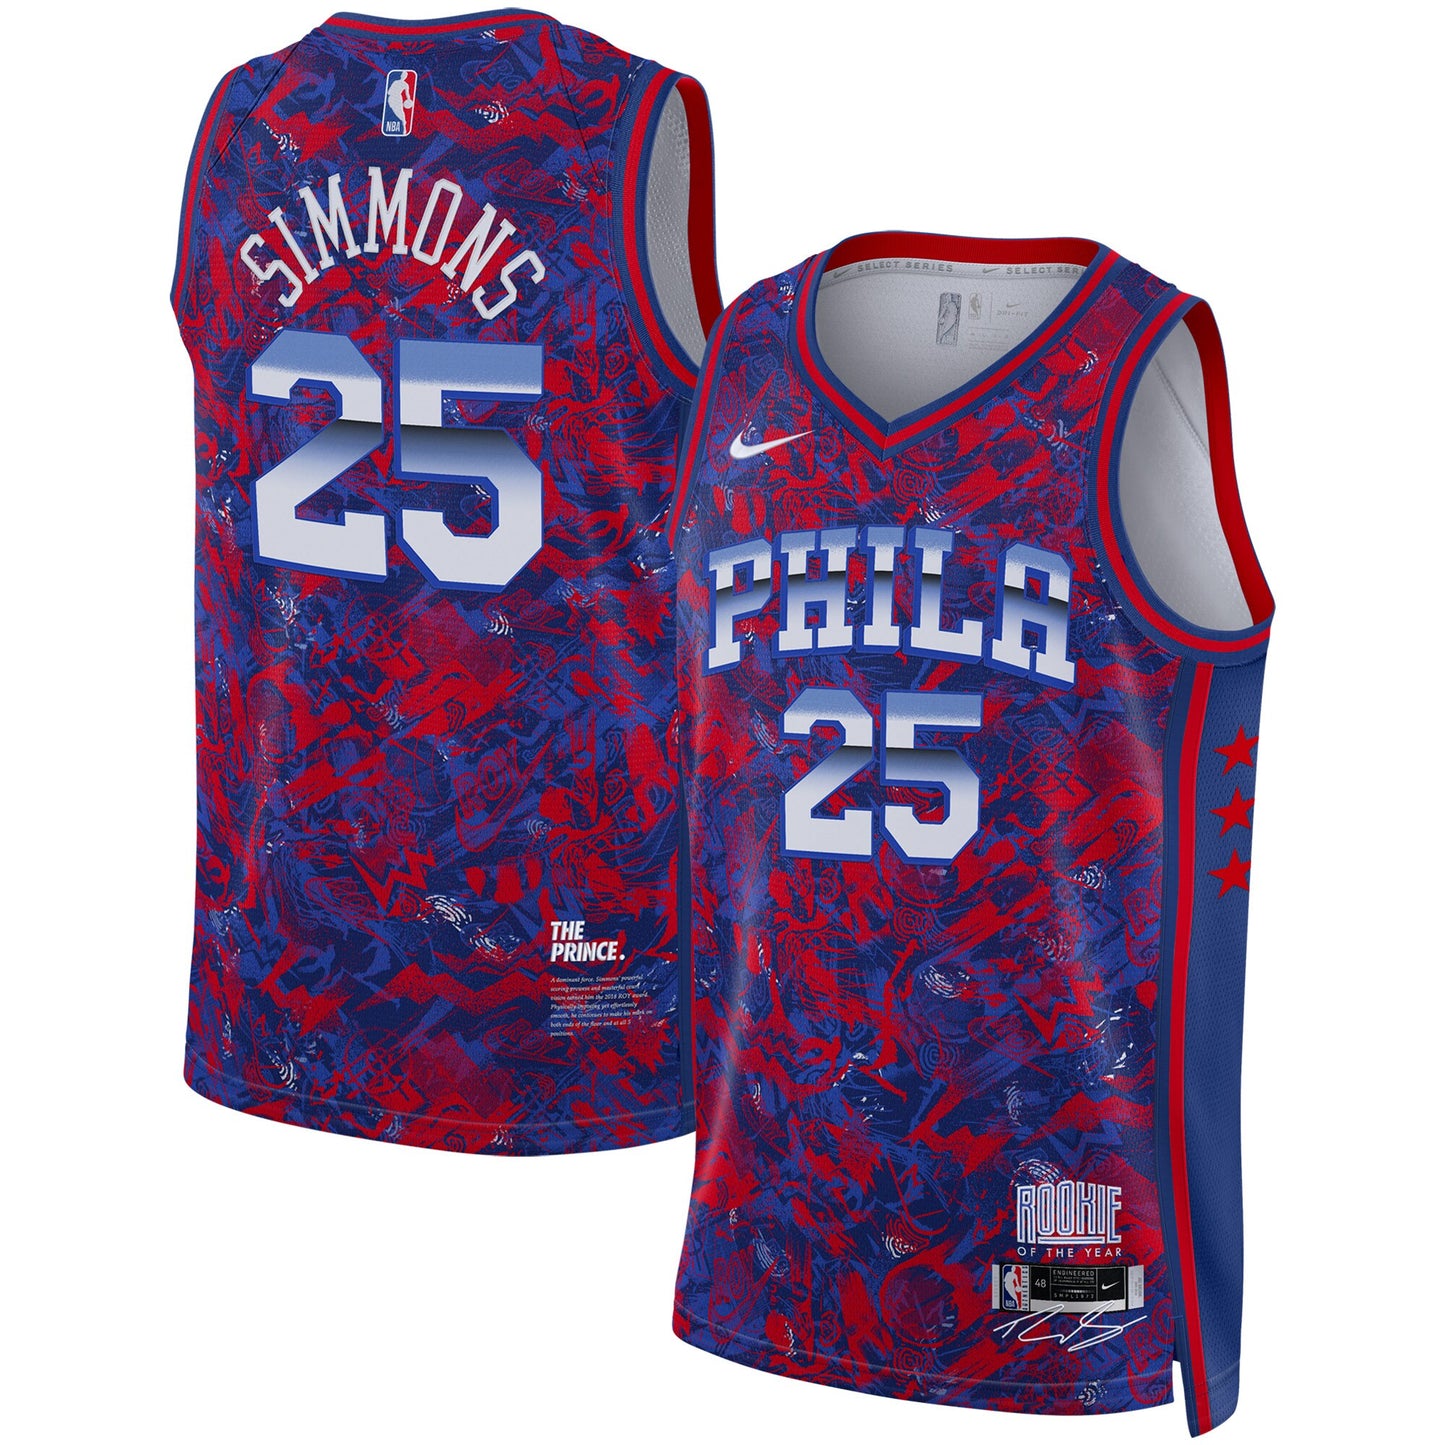 Ben Simmons Philadelphia 76ers Nike Select Series Rookie of the Year Swingman Jersey - Royal/Red